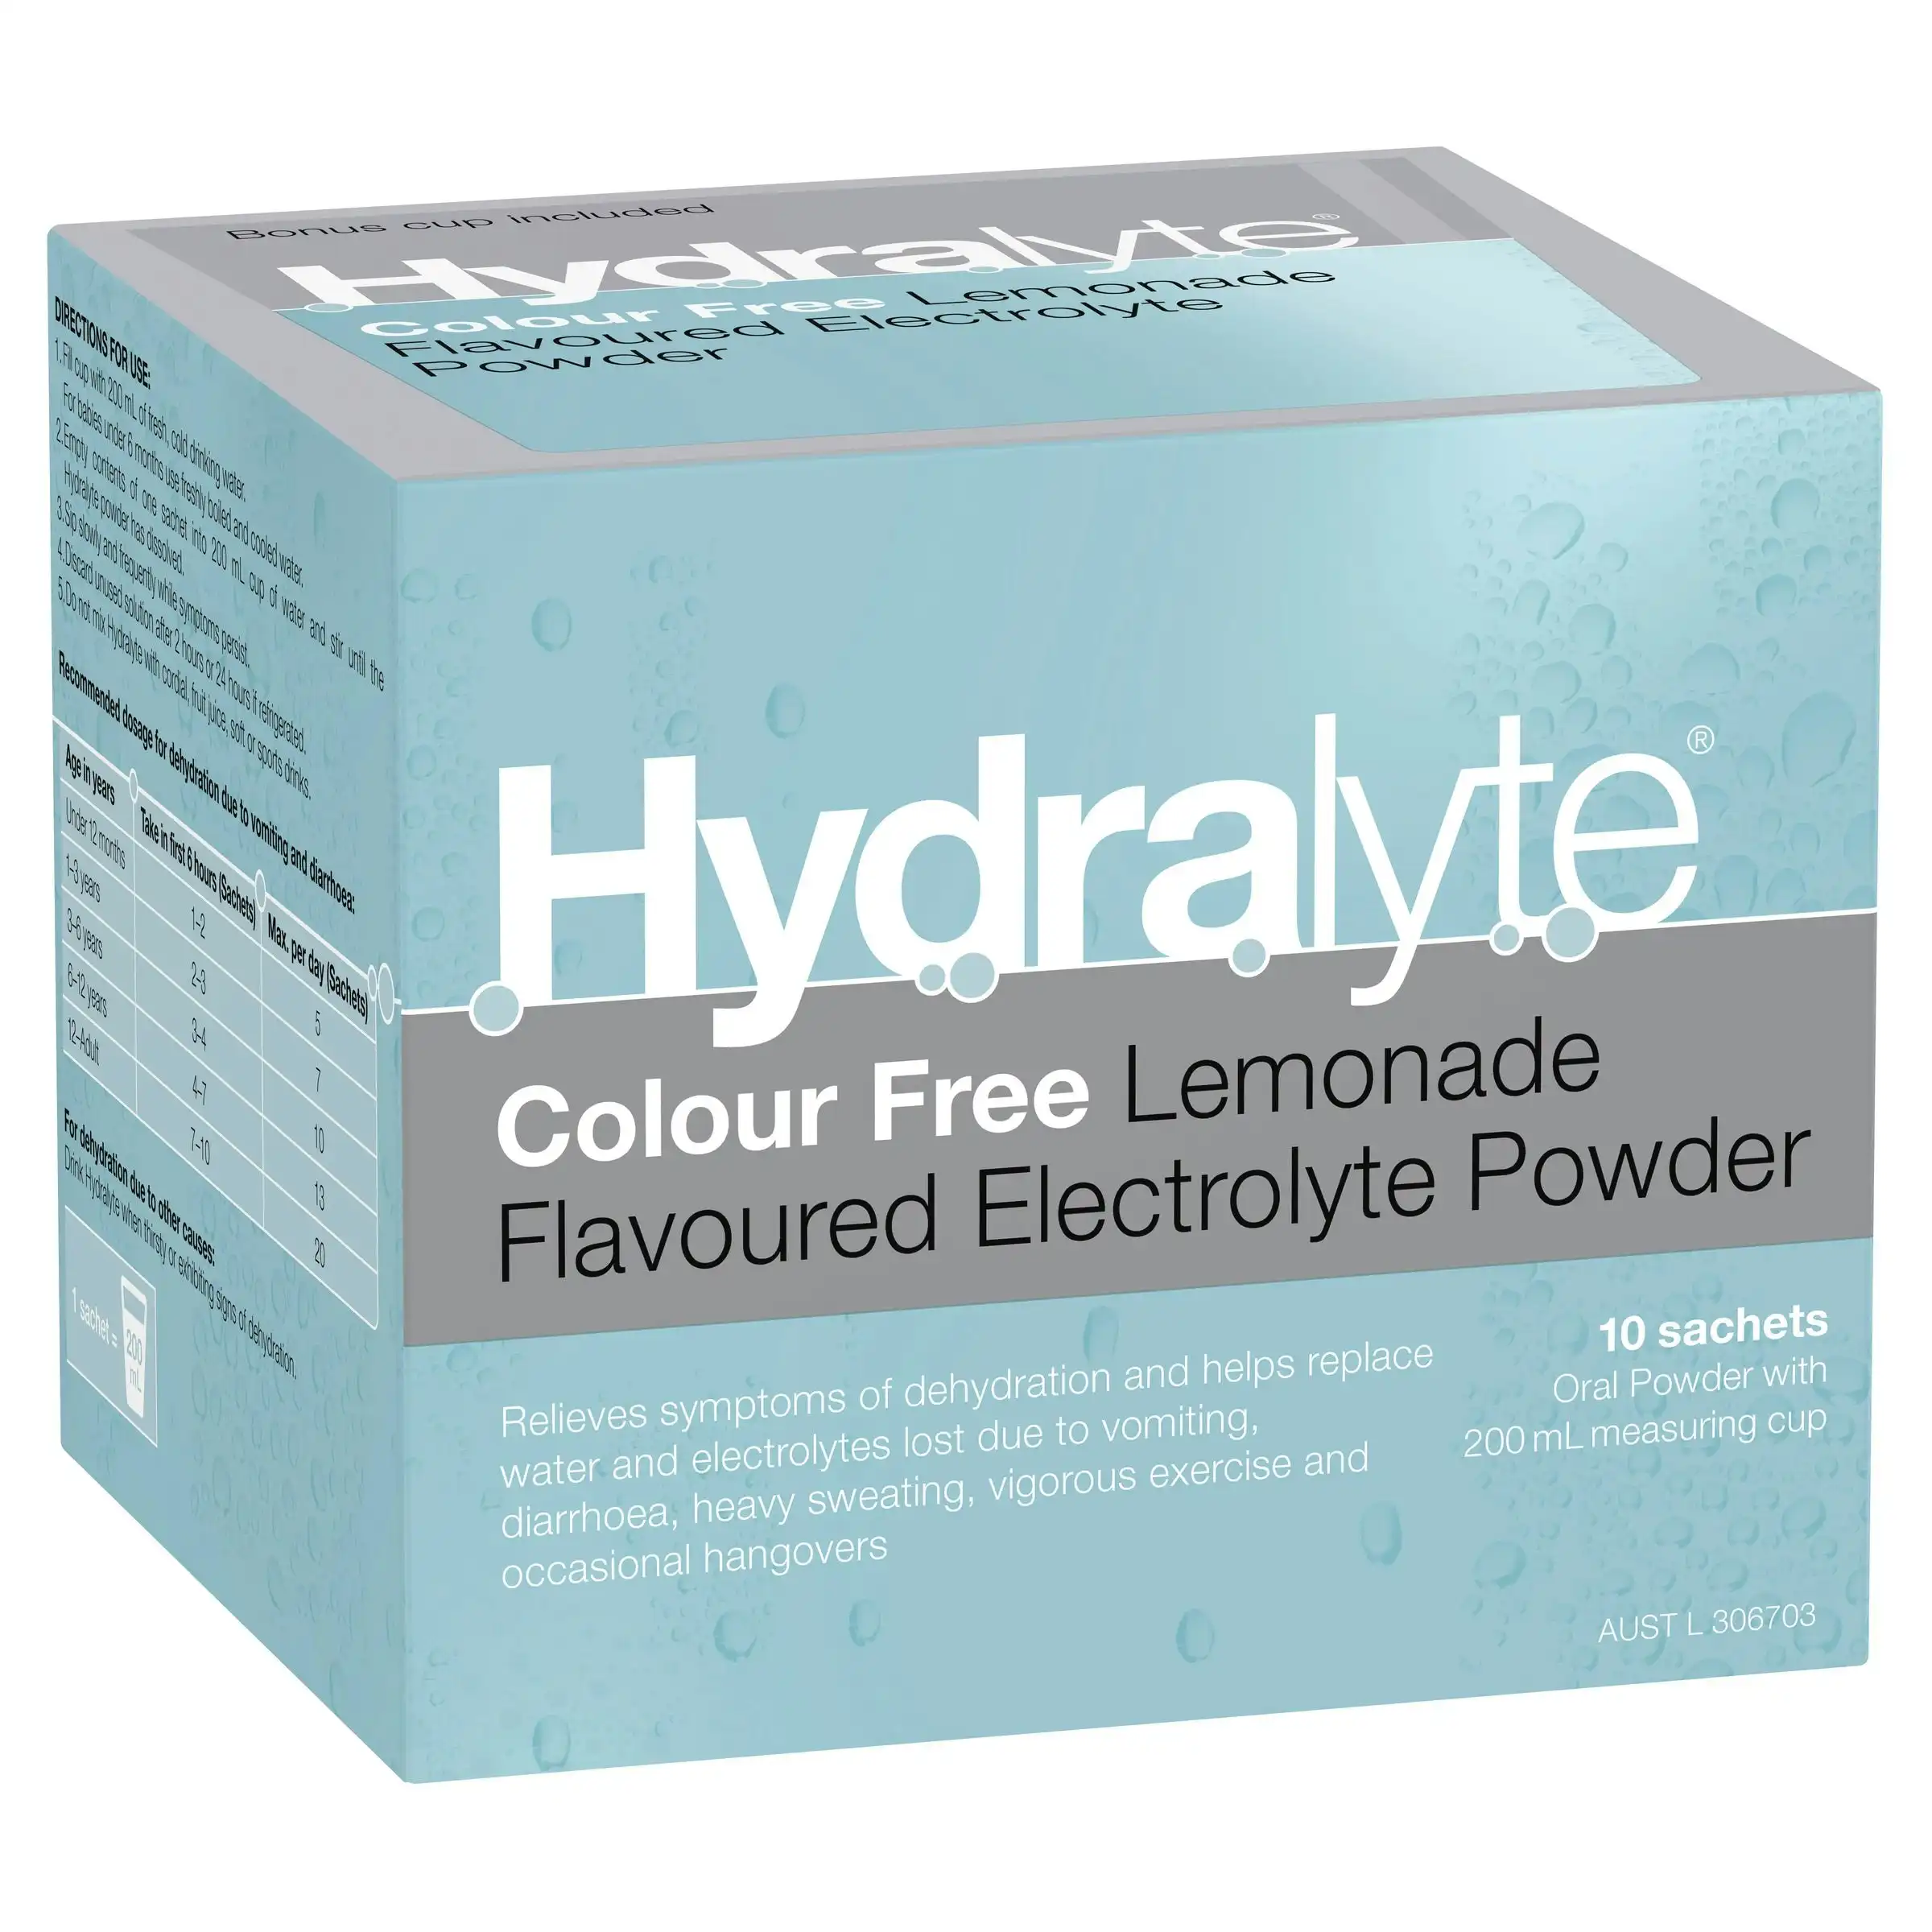 Hydralyte Electrolyte Powder Colour Free Lemonade 10 Sachets